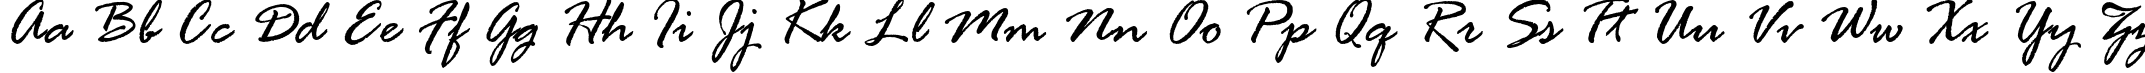 Пример написания английского алфавита шрифтом Rage Italic